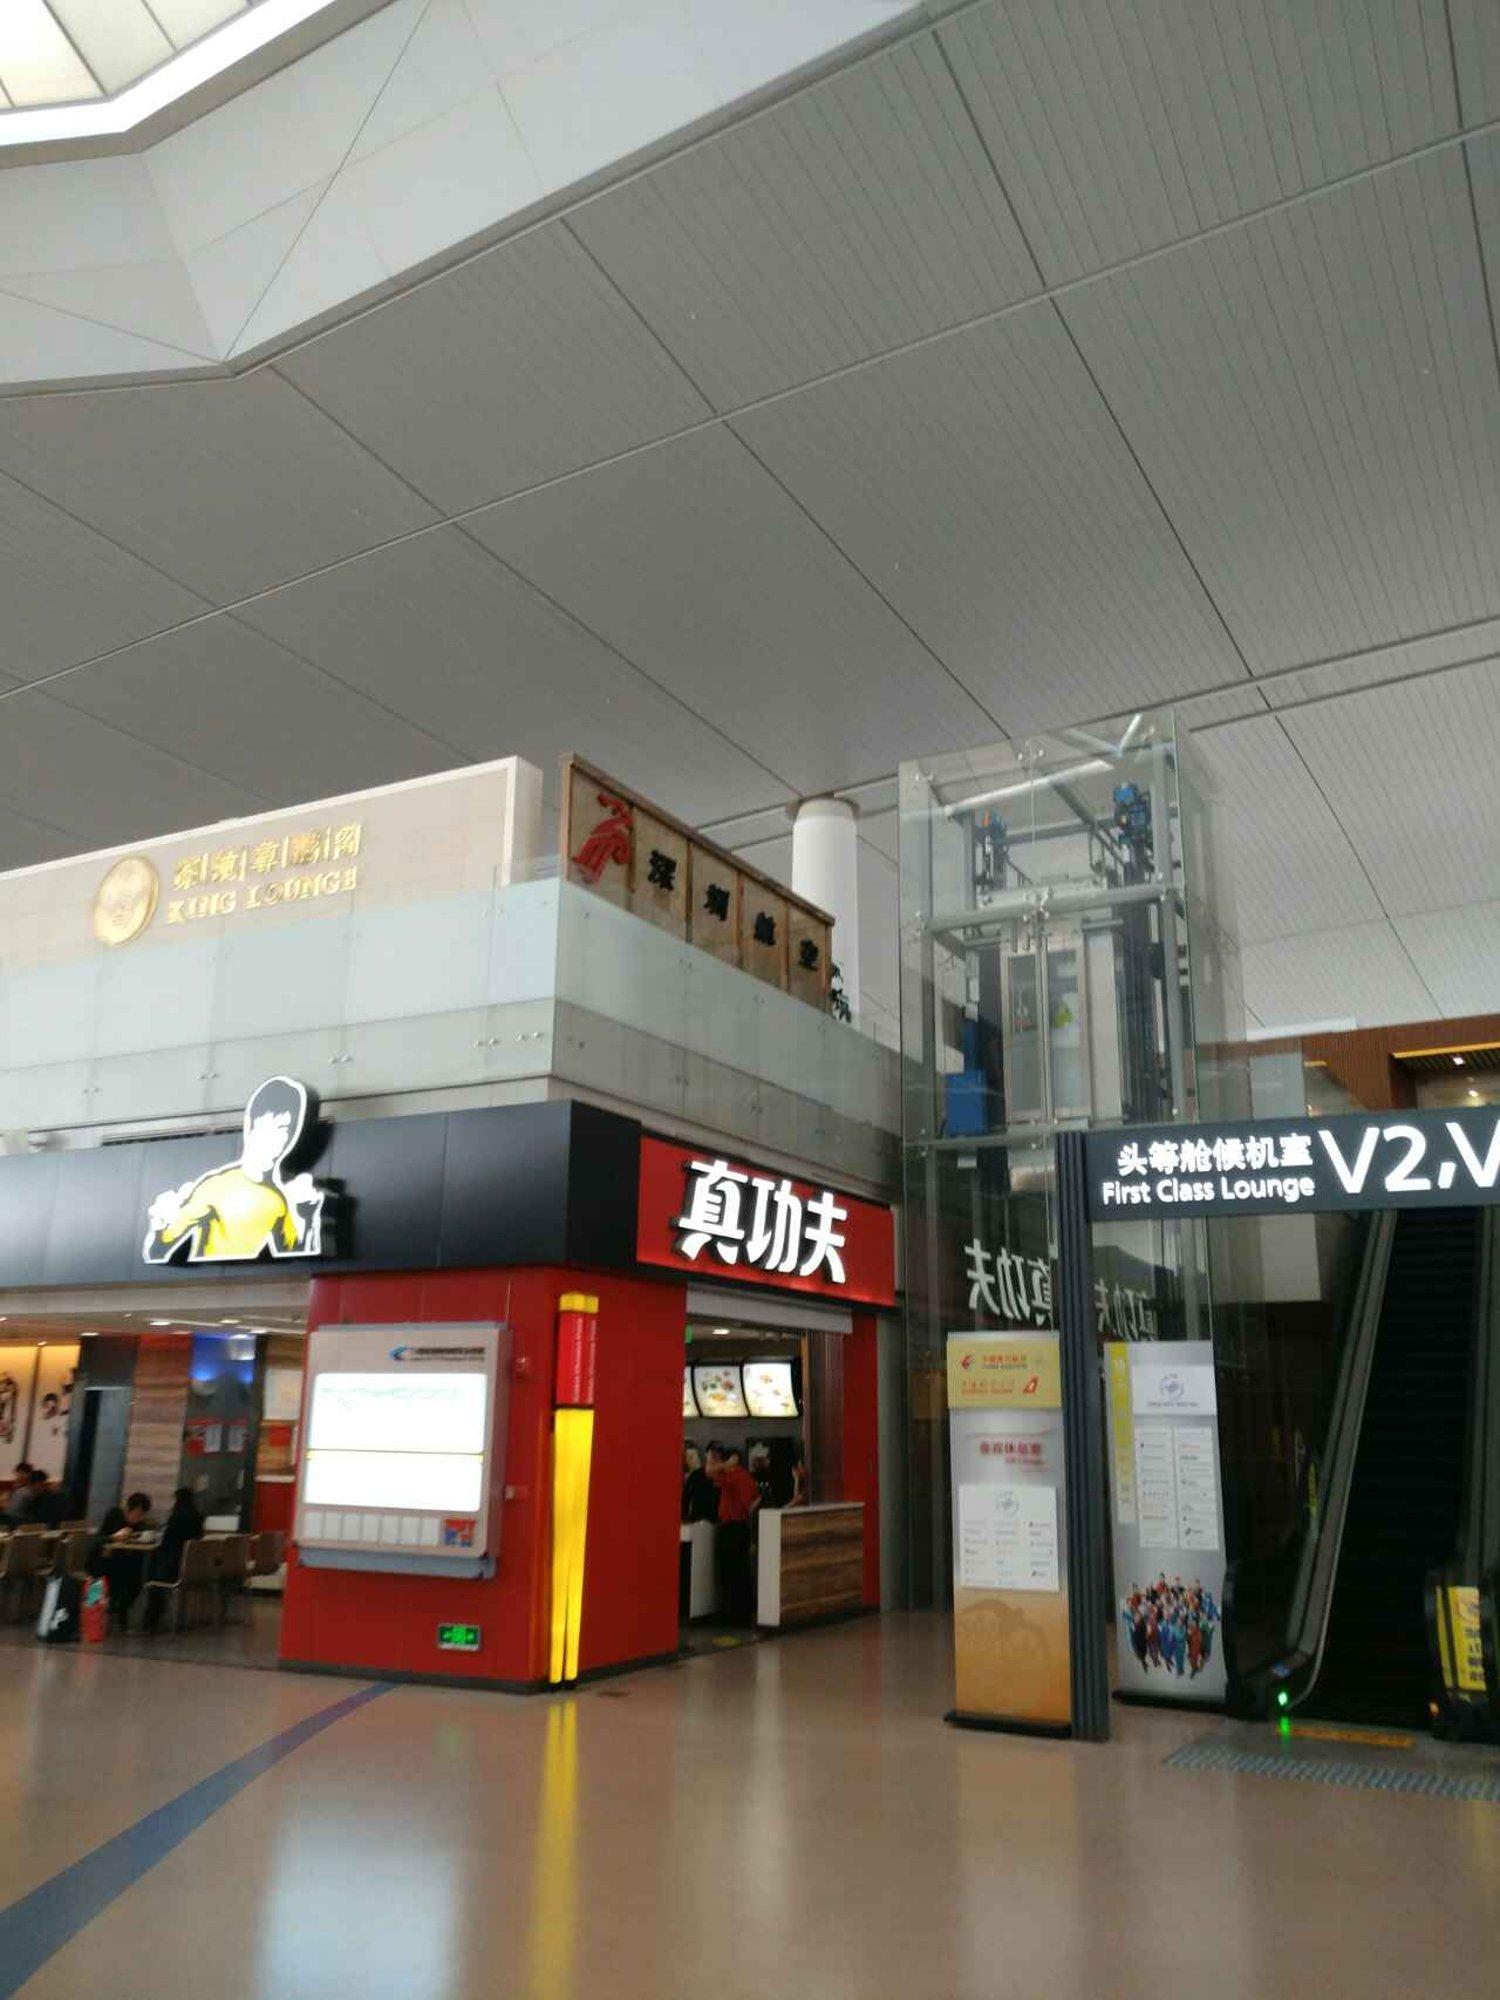 V2 Shenzhen Airlines King Lounge image 4 of 4